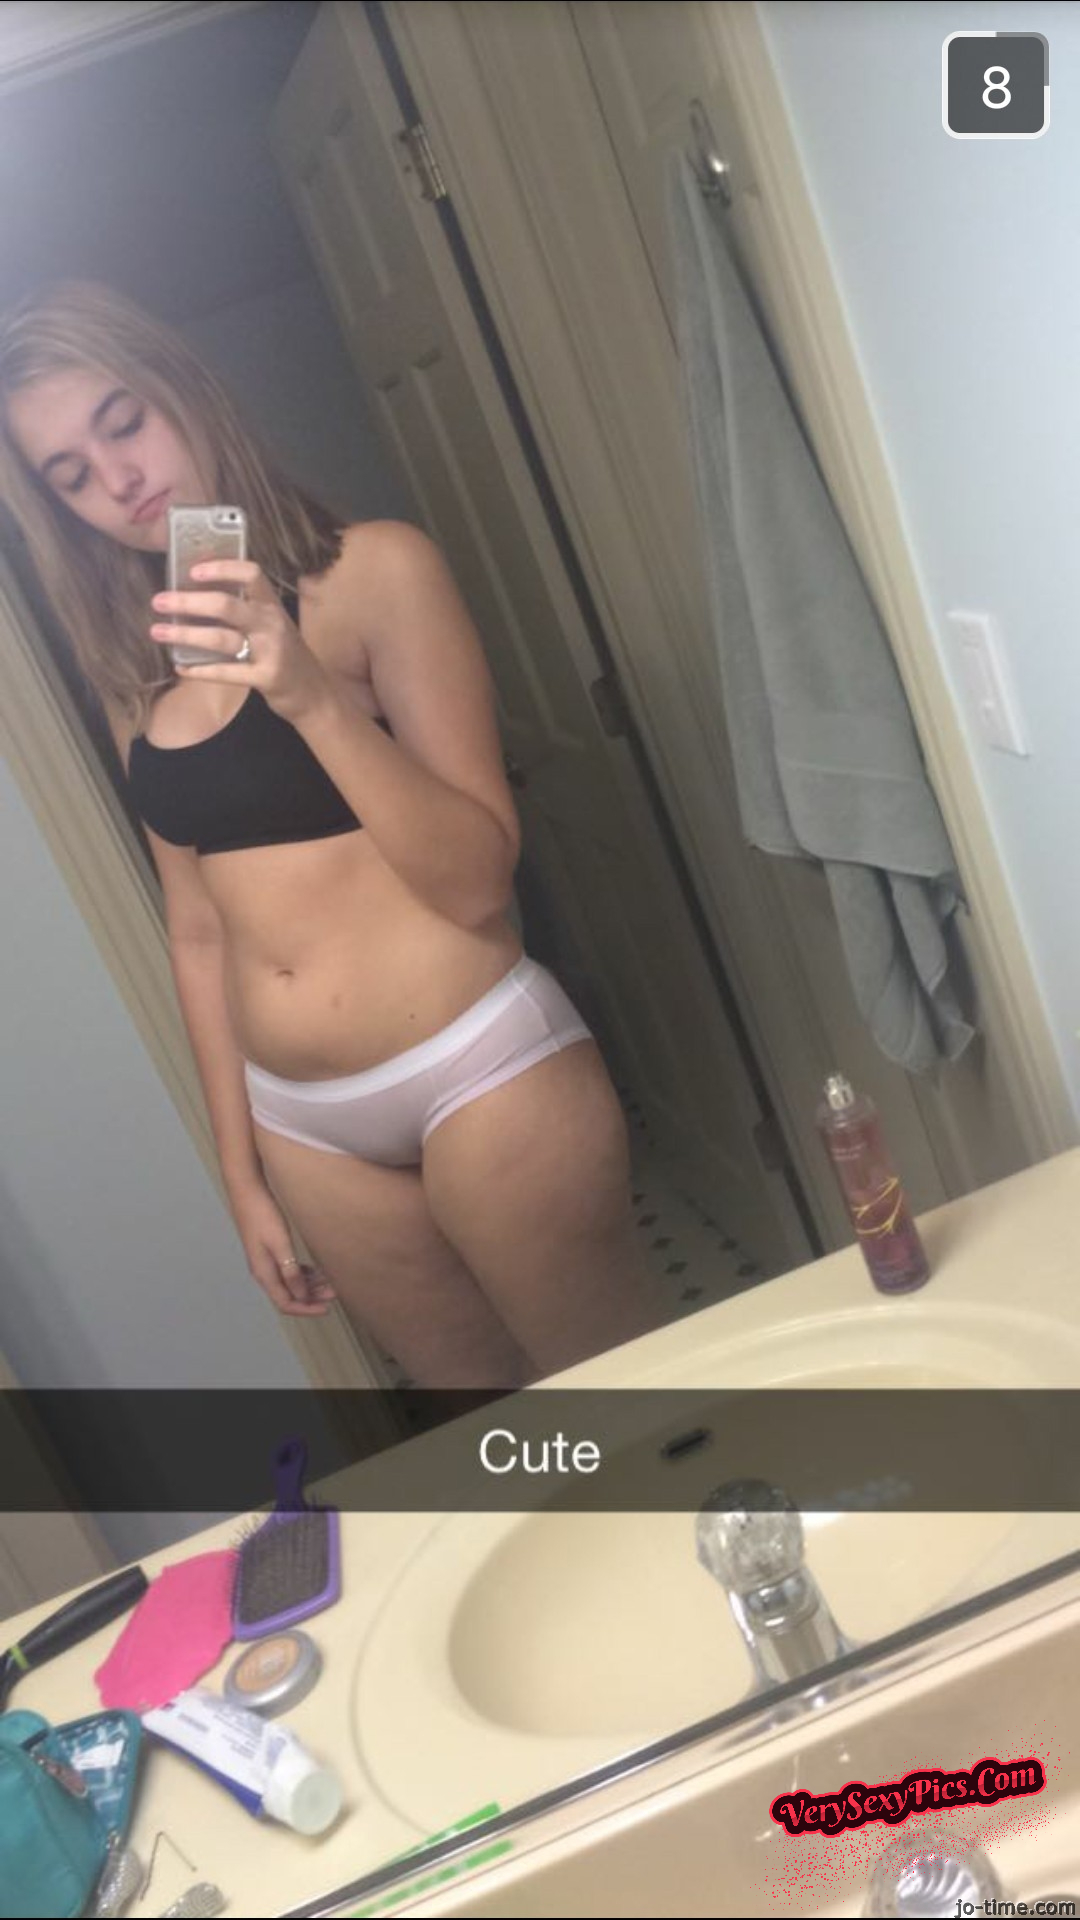 Cute teen doesn't hide her big juicy boobs